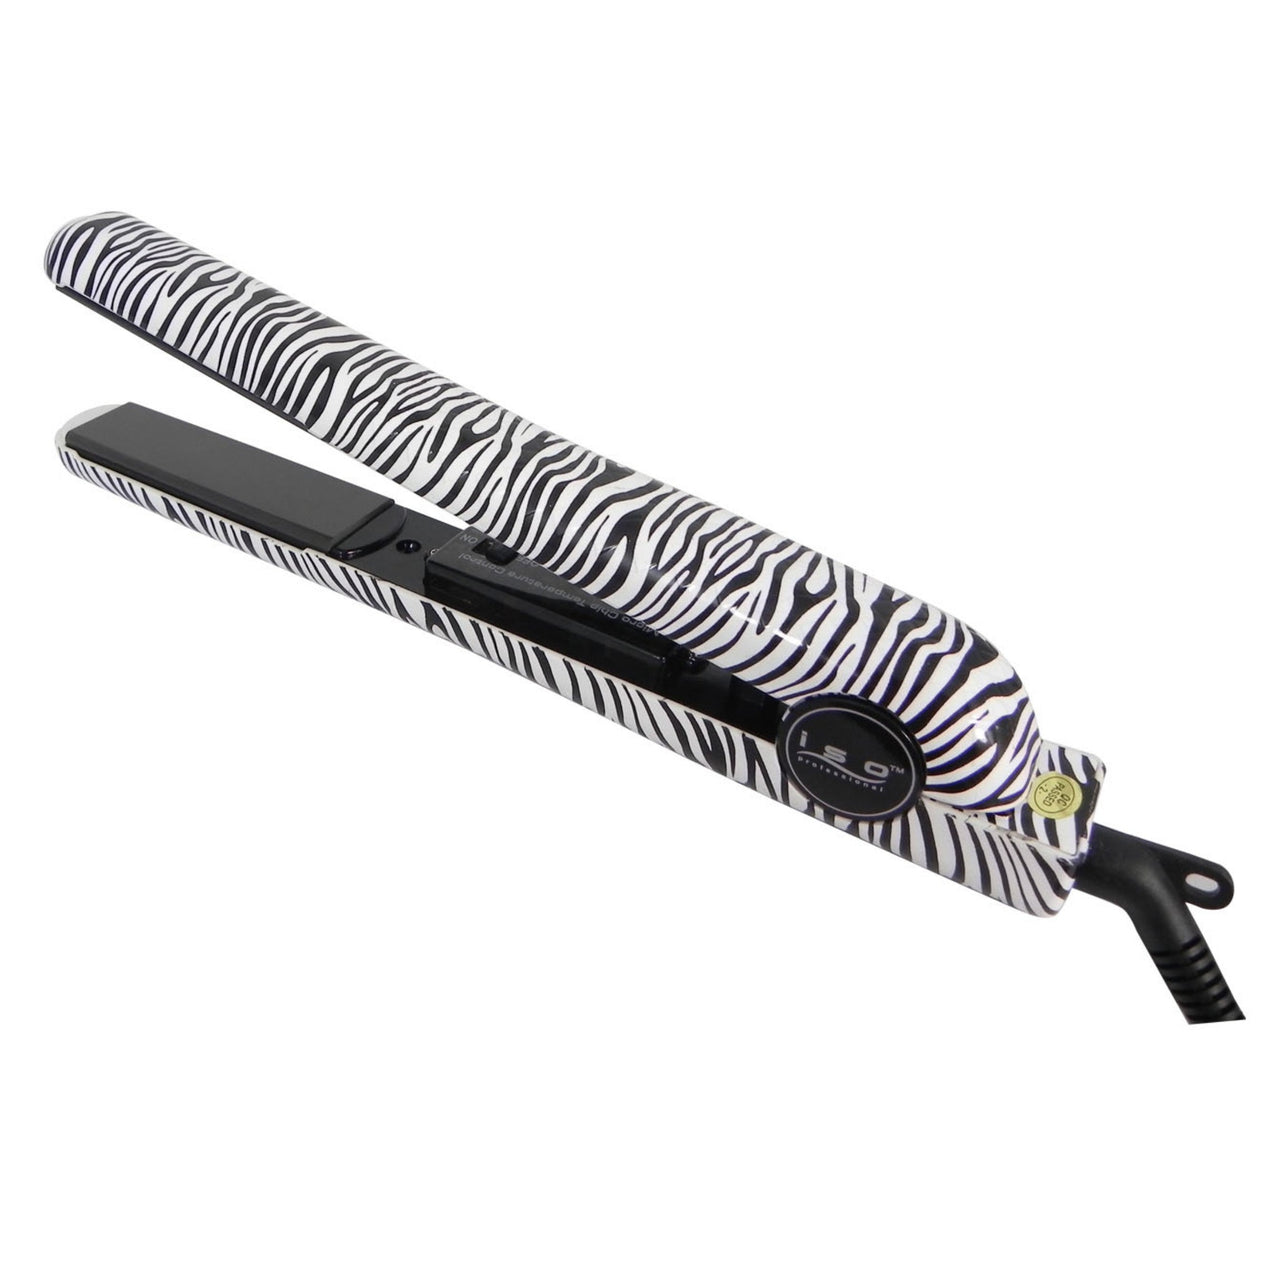 Limited Edition White Zebra 1.25" Ceramic Flat Iron Hair Straightener with Adjustable Temperature